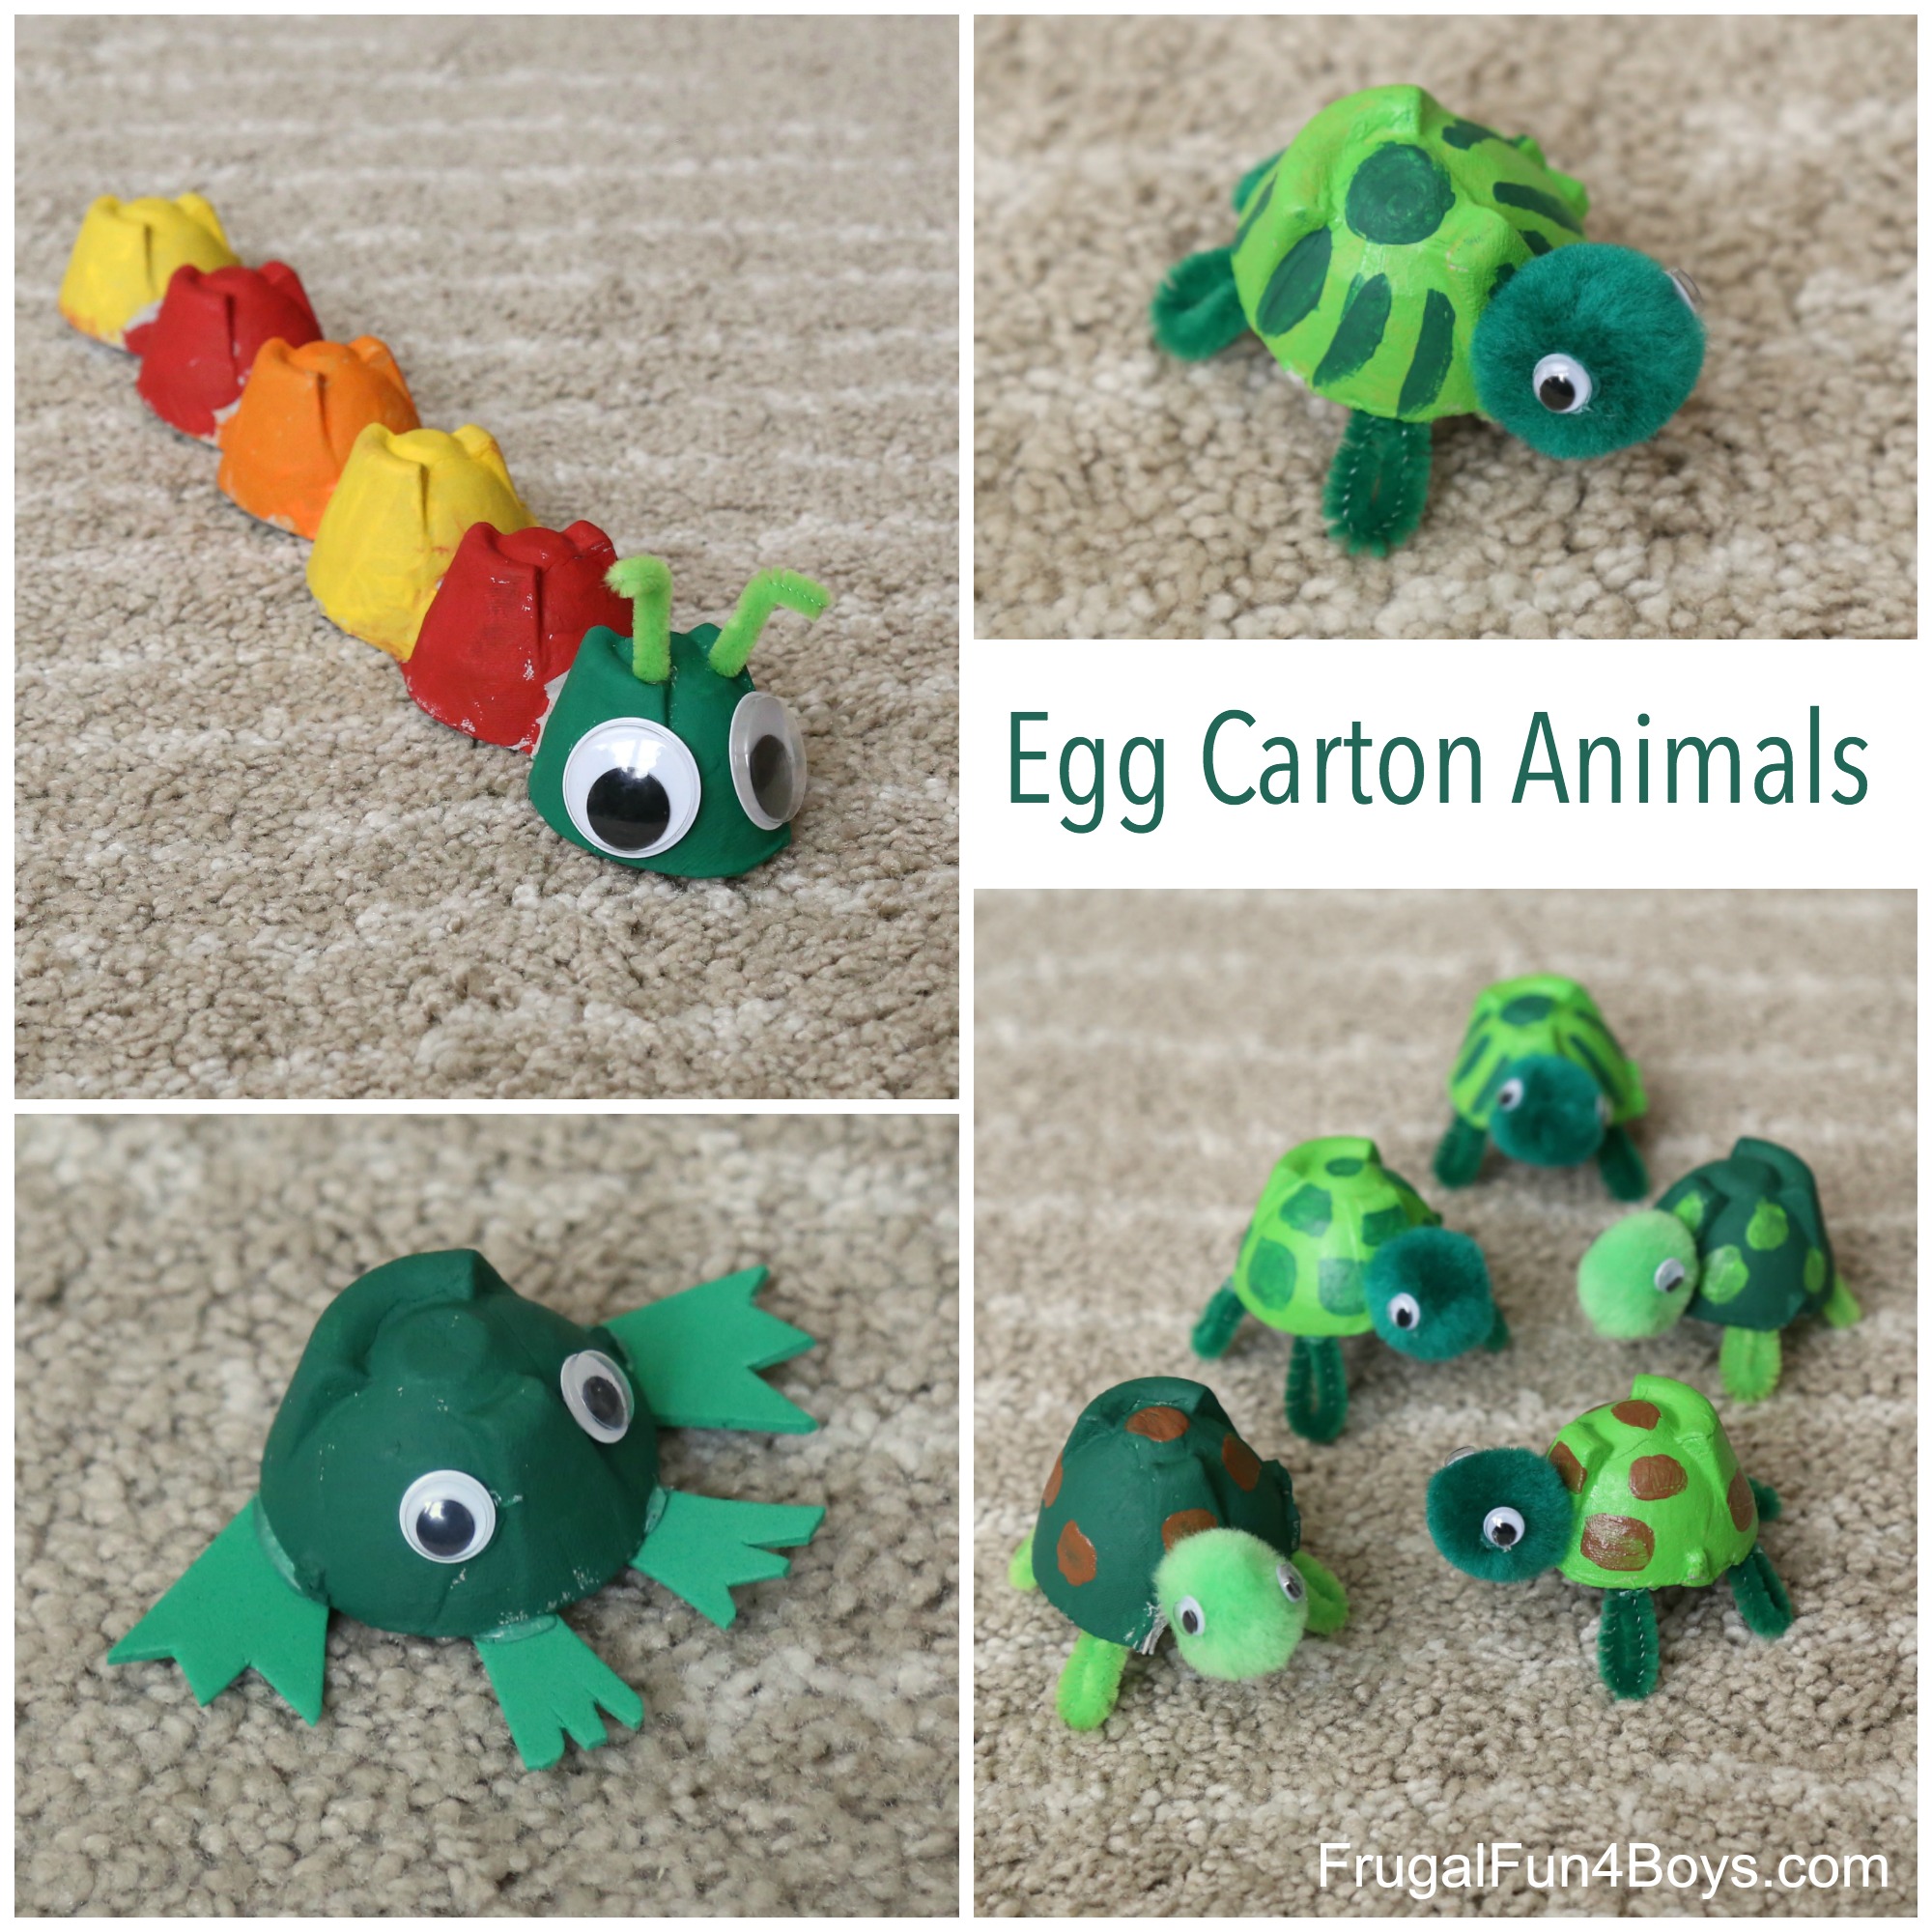 Egg Carton Animal Craft! Make Turtles, Caterpillars, and Frogs